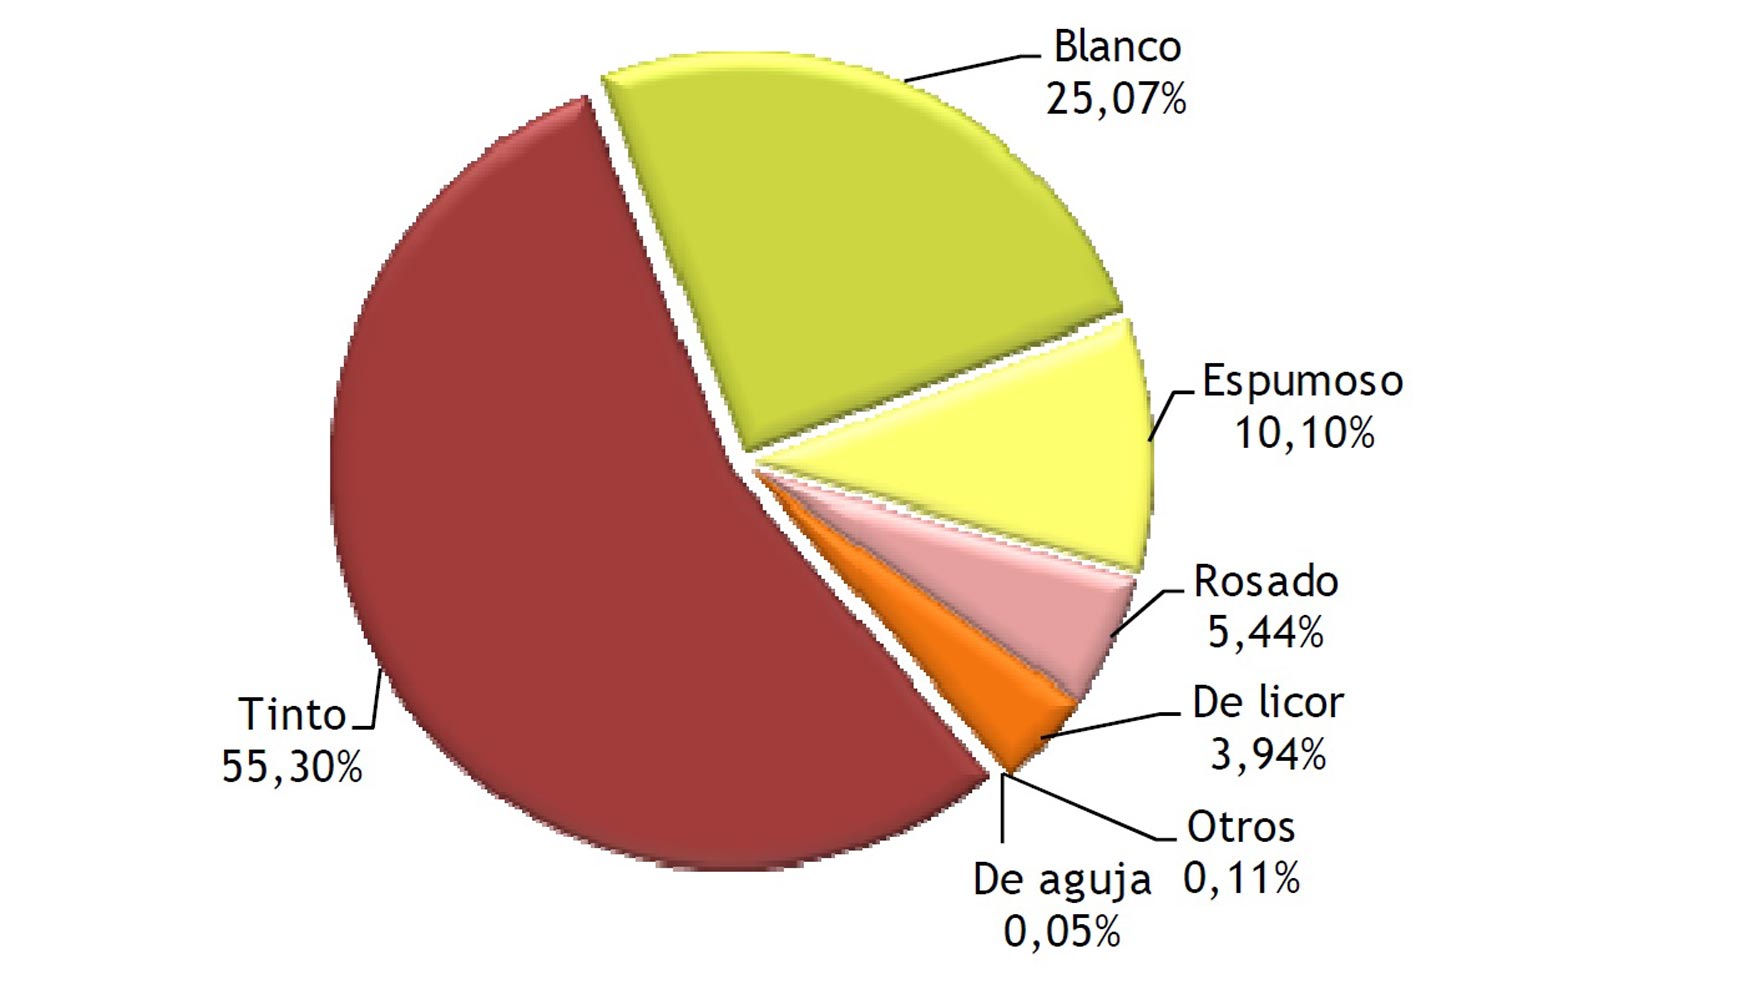 Comercializacin interior por tipos de vino (6.803.339 hl)